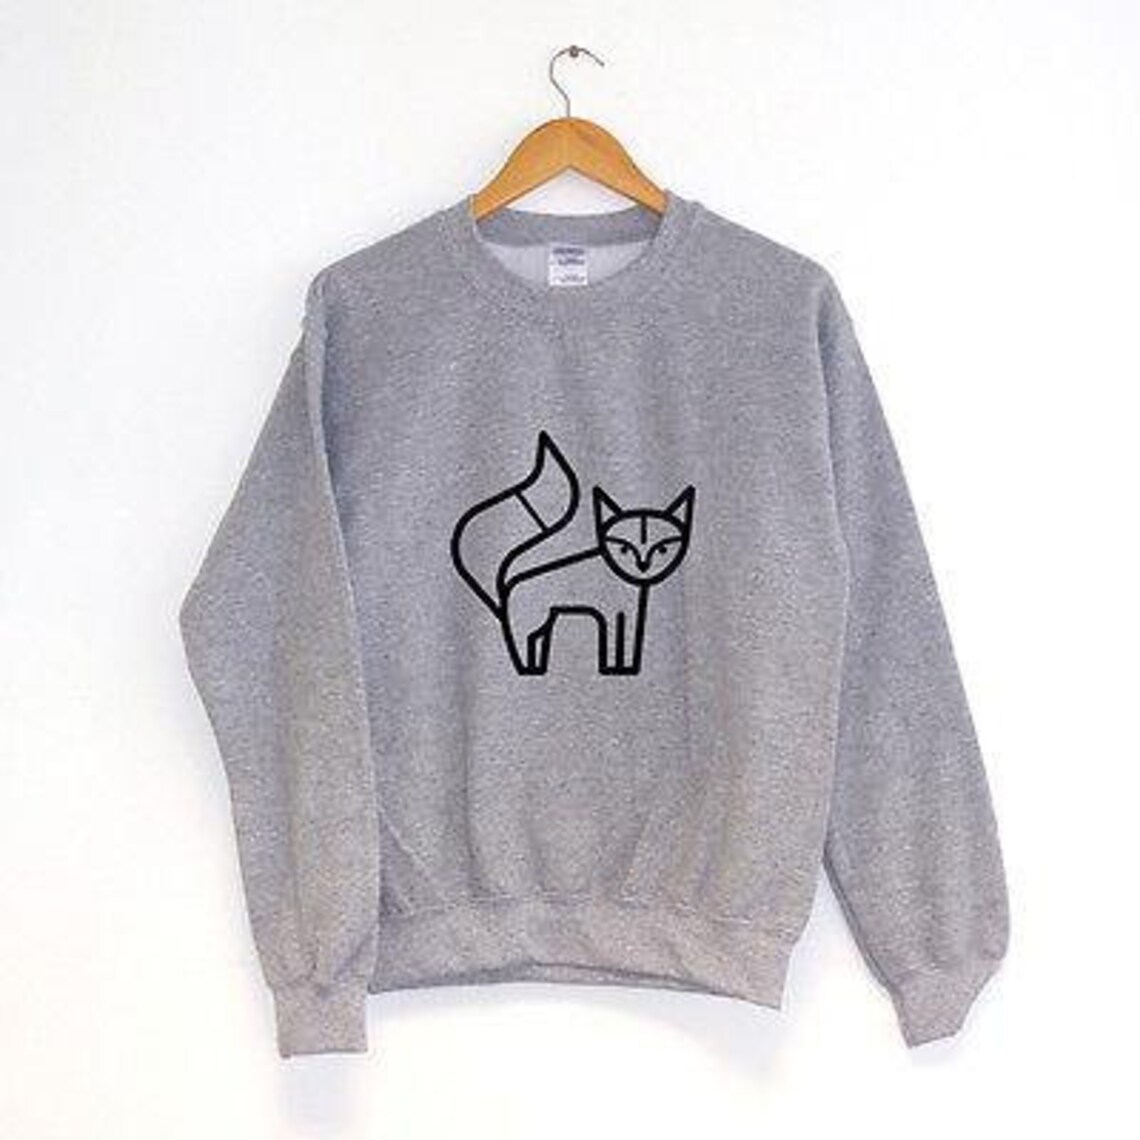 Fox sweater sweatshirt jumper hipster clothing | Etsy